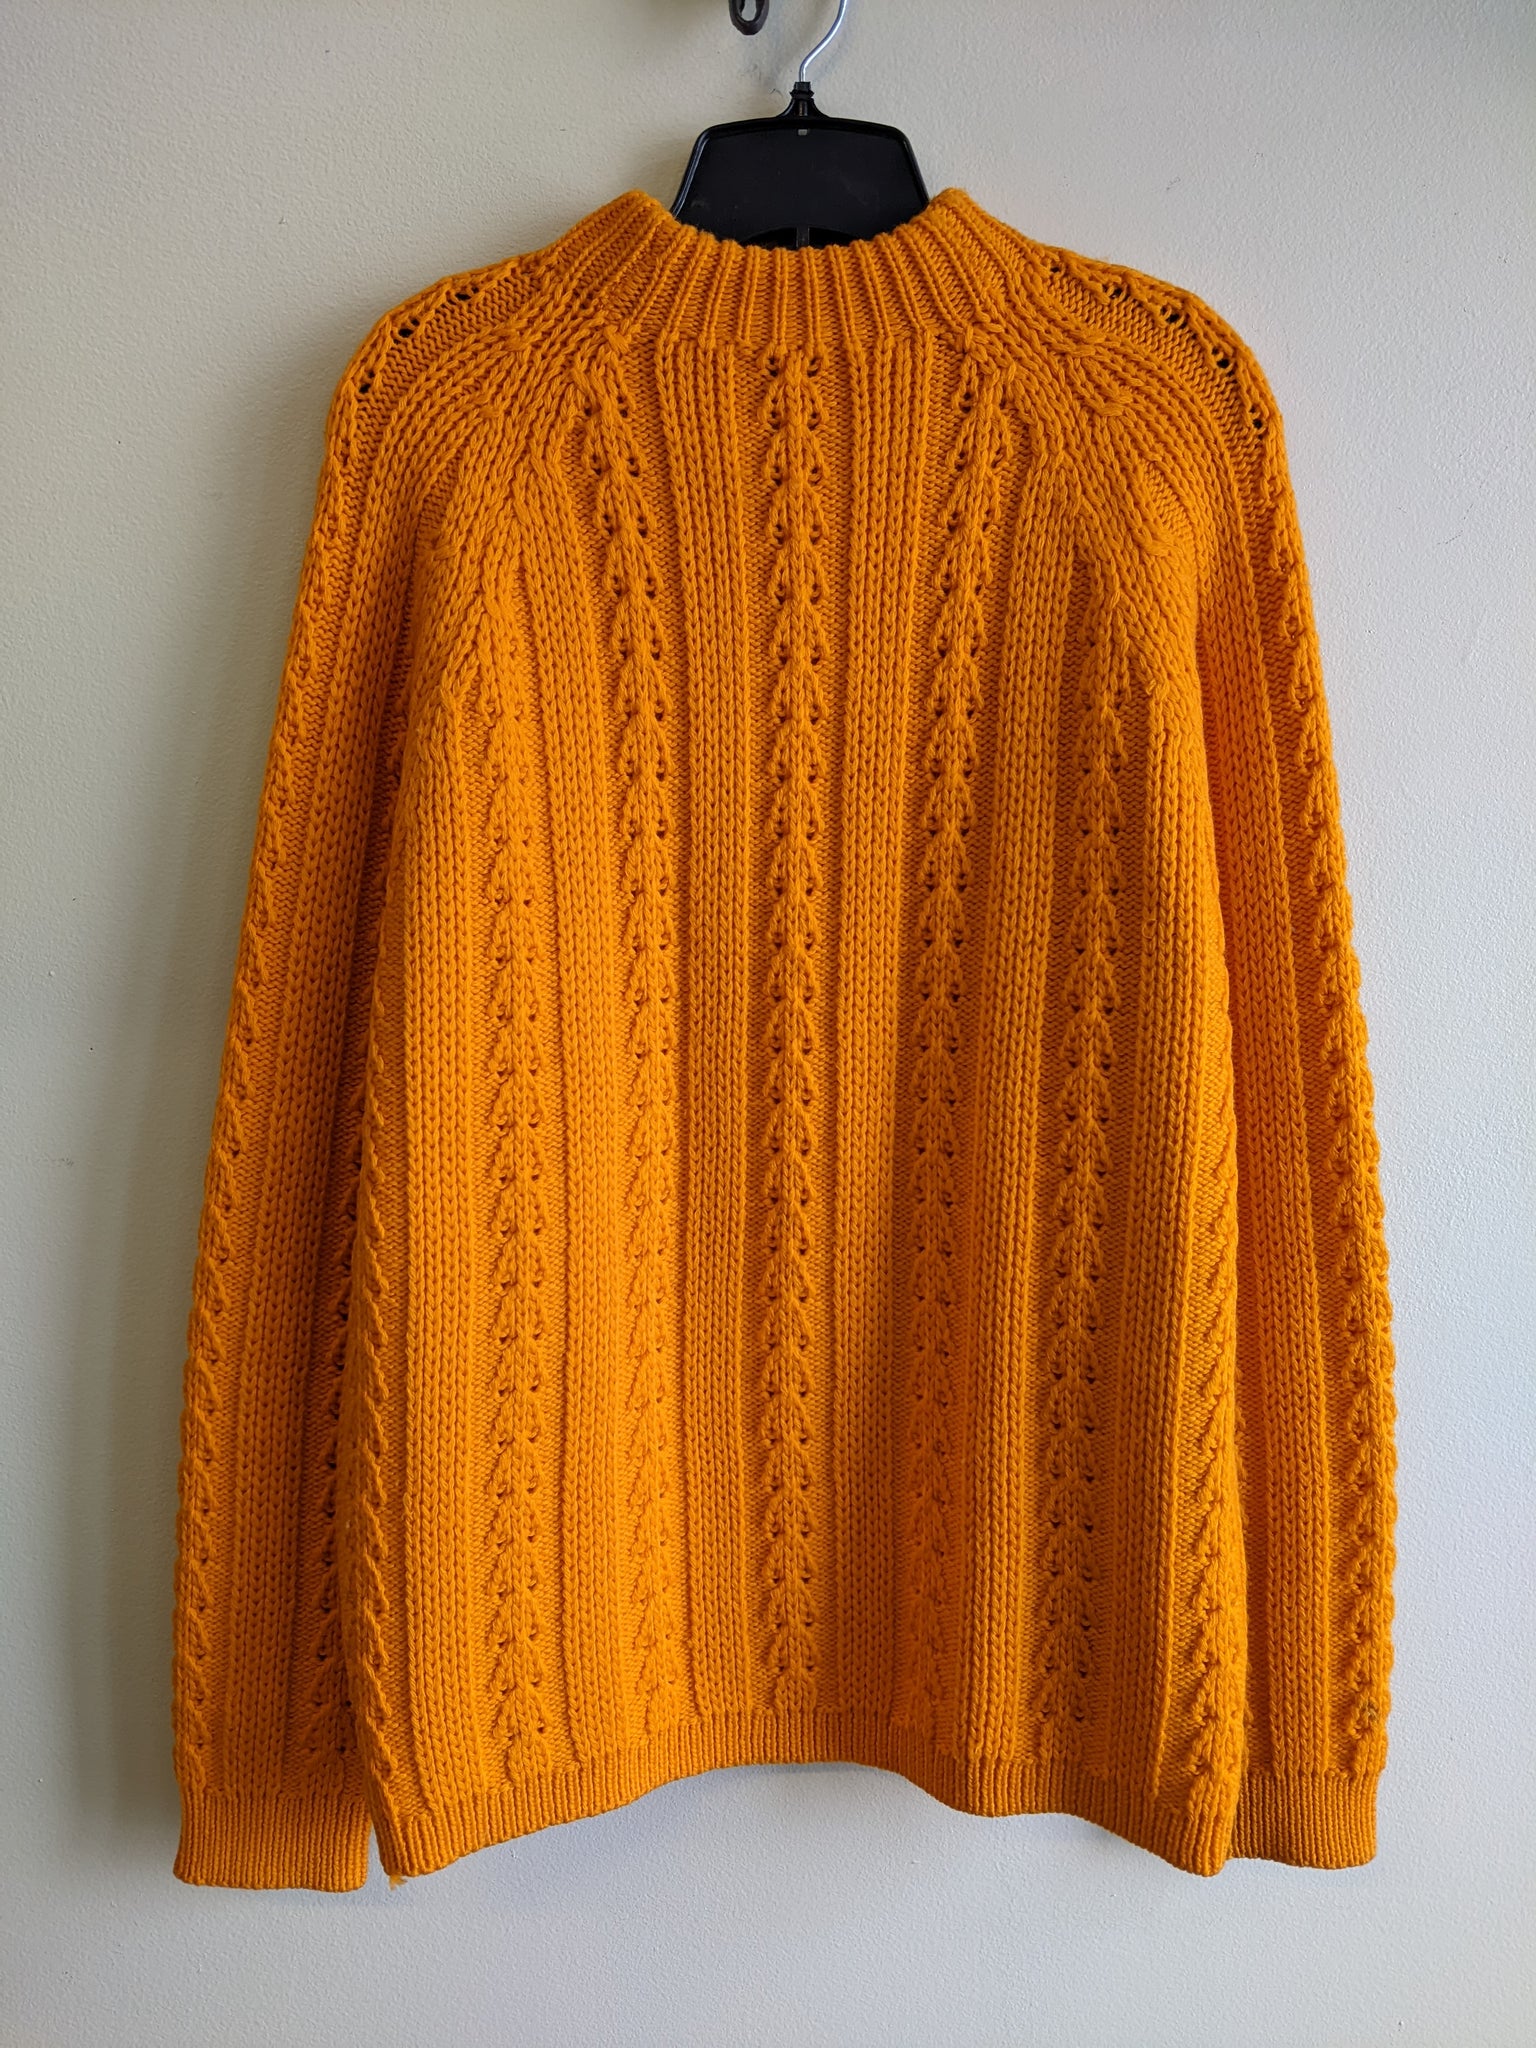 Fantastic Orange Wool Sweater - L